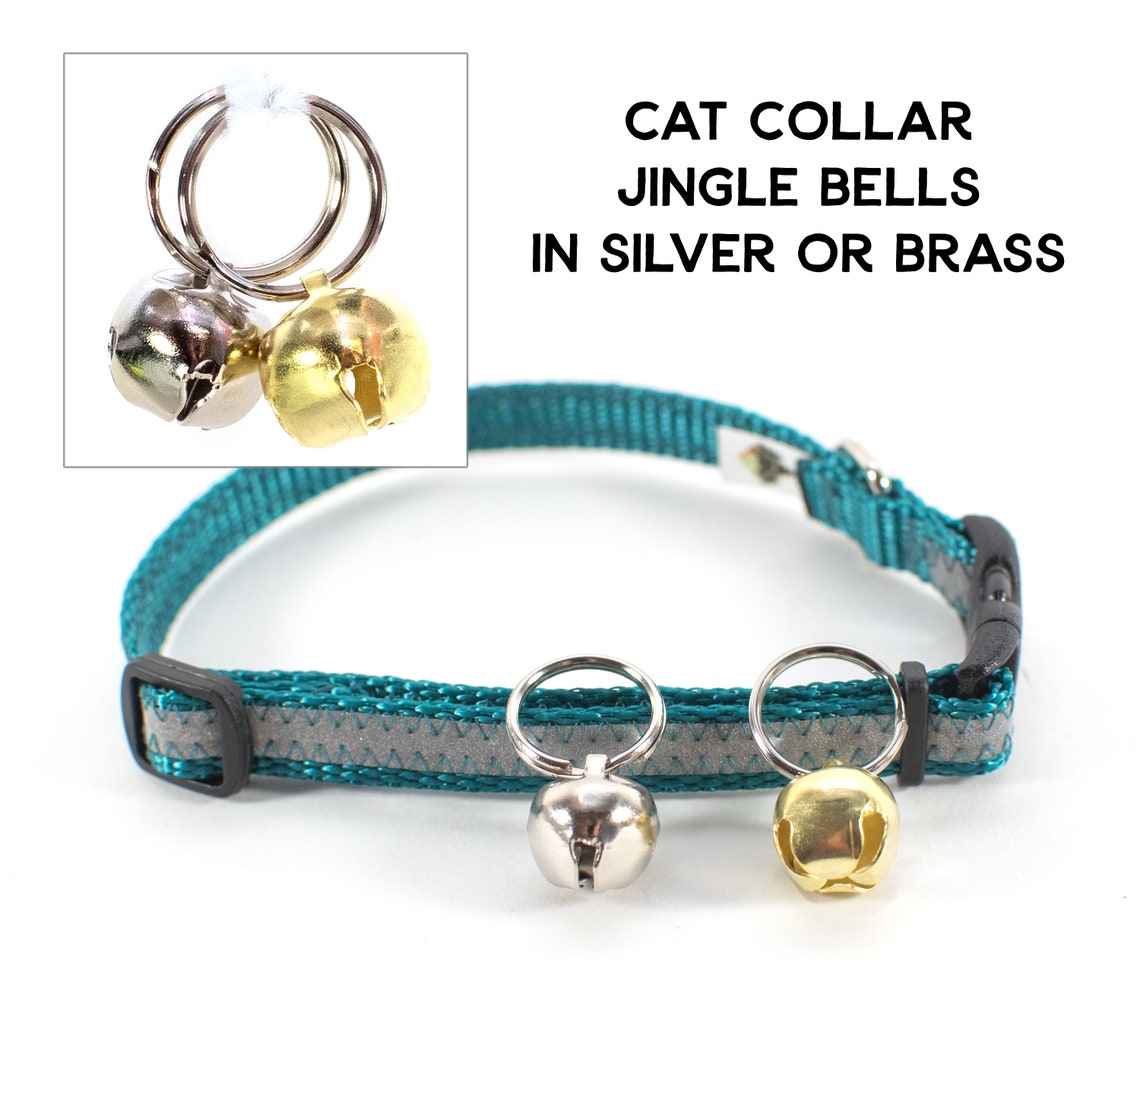 The Worthy Dog Kaleidoscope Breakaway Adjustable Cat Collar - Multicolored - One Size